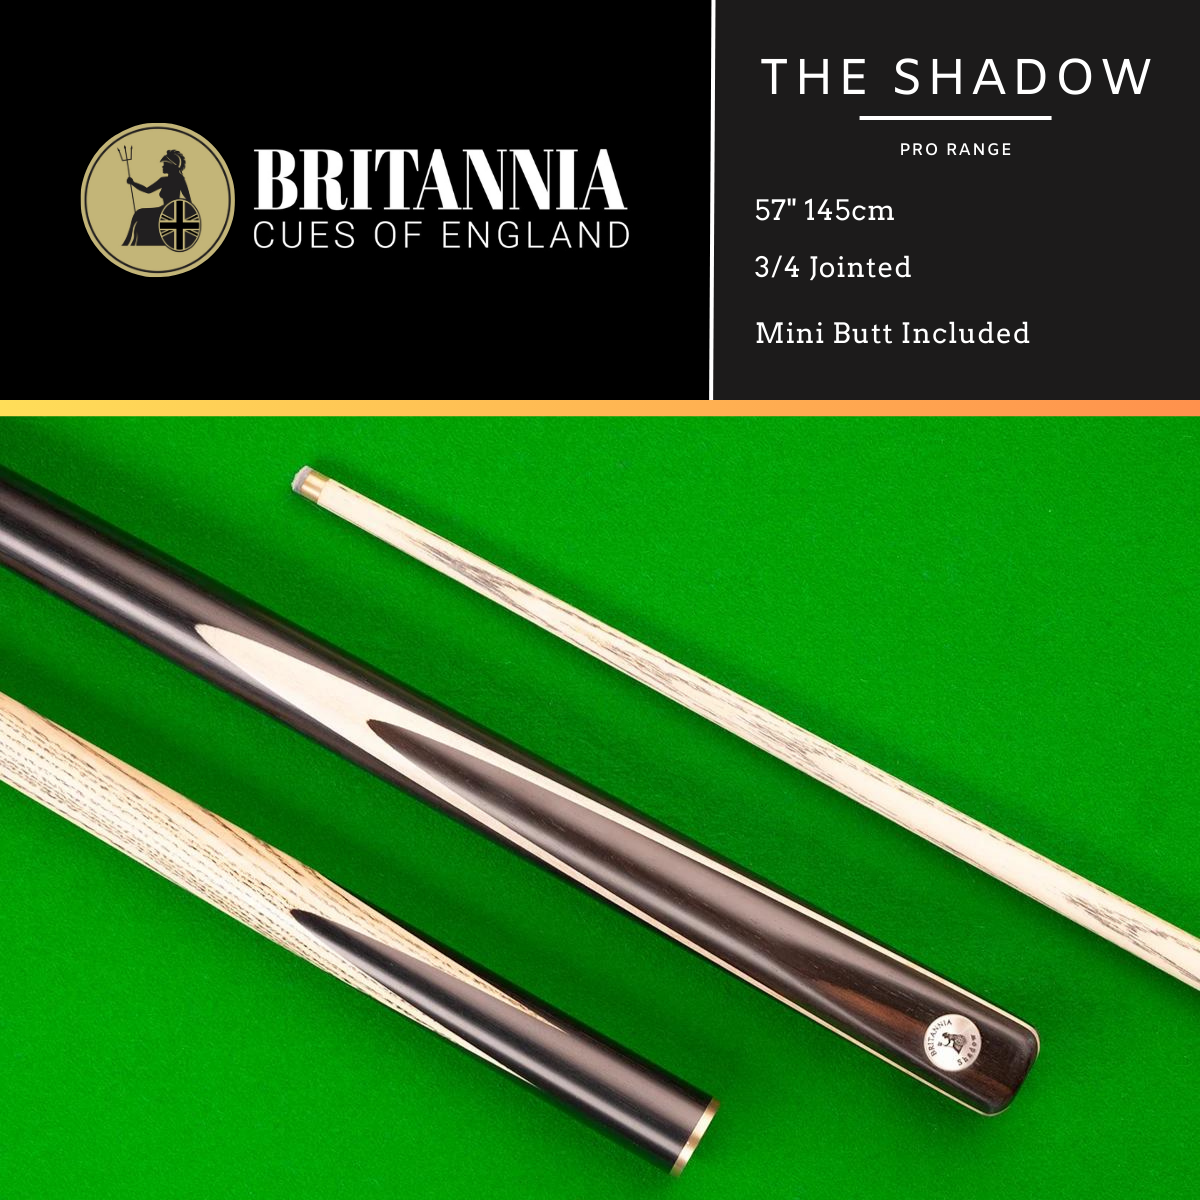 Britannia 3/4 Jointed Shadow Pro Range British Pool Cue